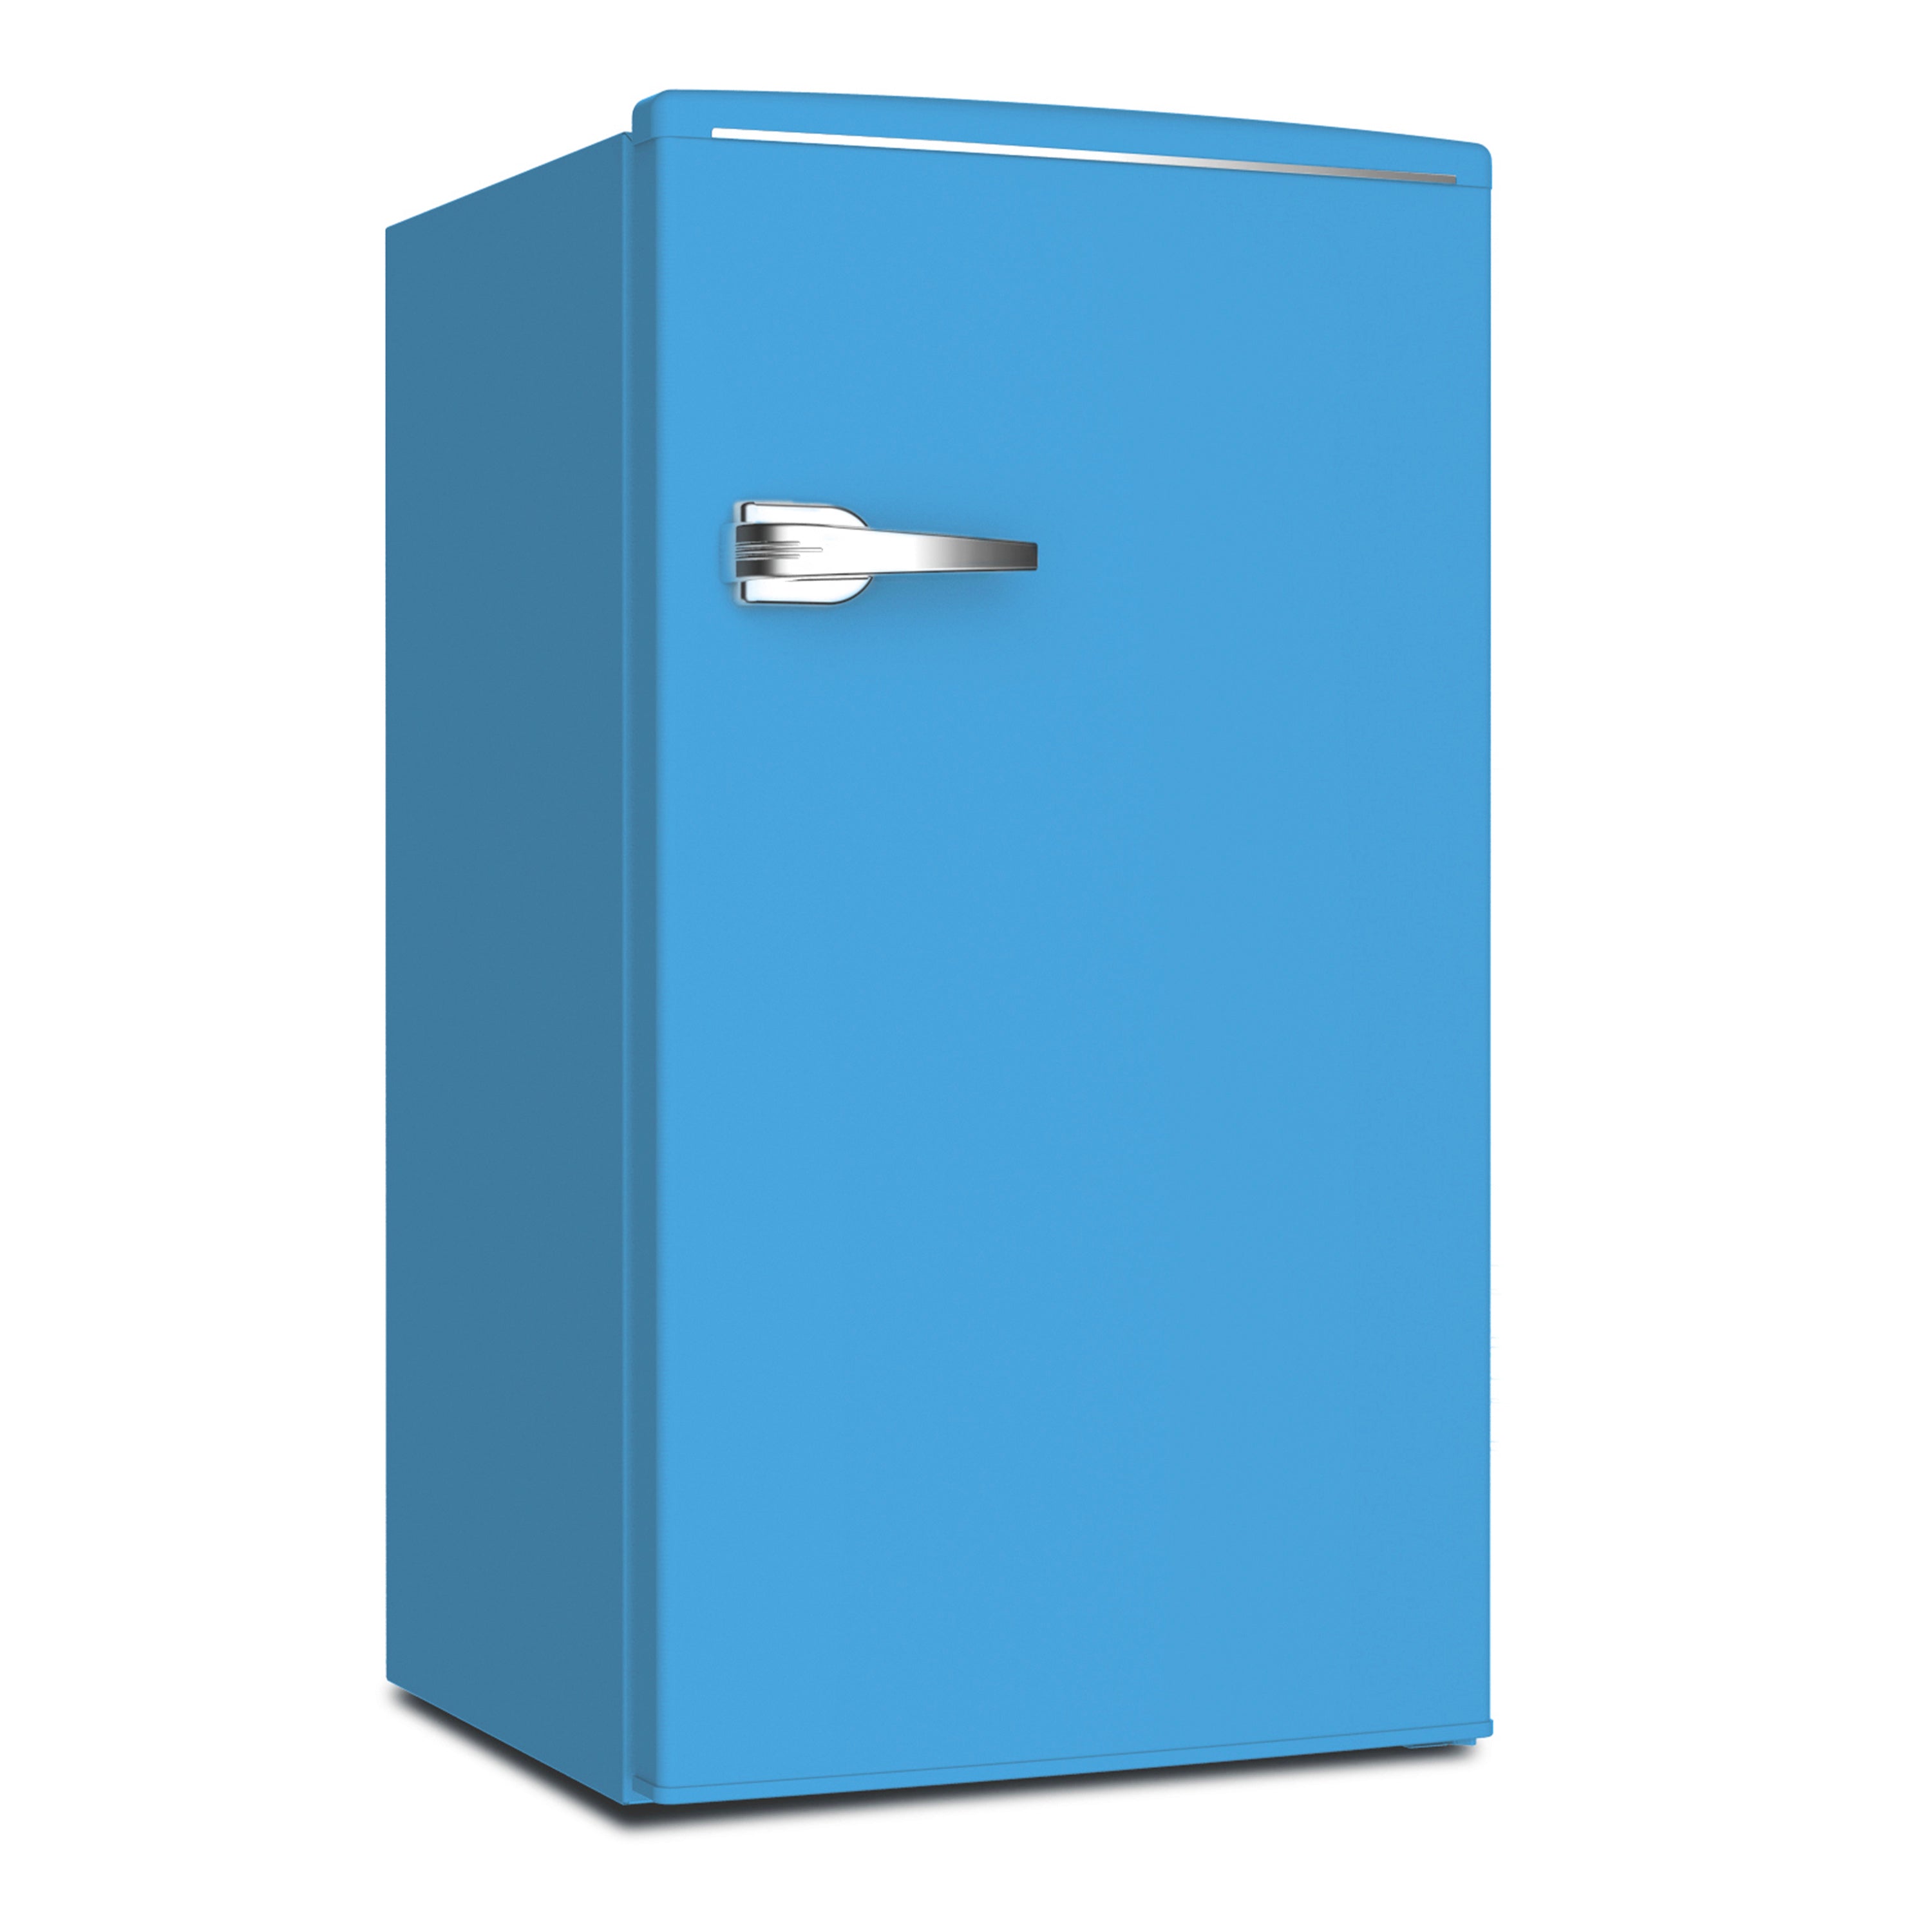 Avanti - RMRS31X6BL-IS, Avanti Retro Series Undercounter Refrigerator, Mini-Fridge, 3.1 cu. ft., in Robin Egg Blue